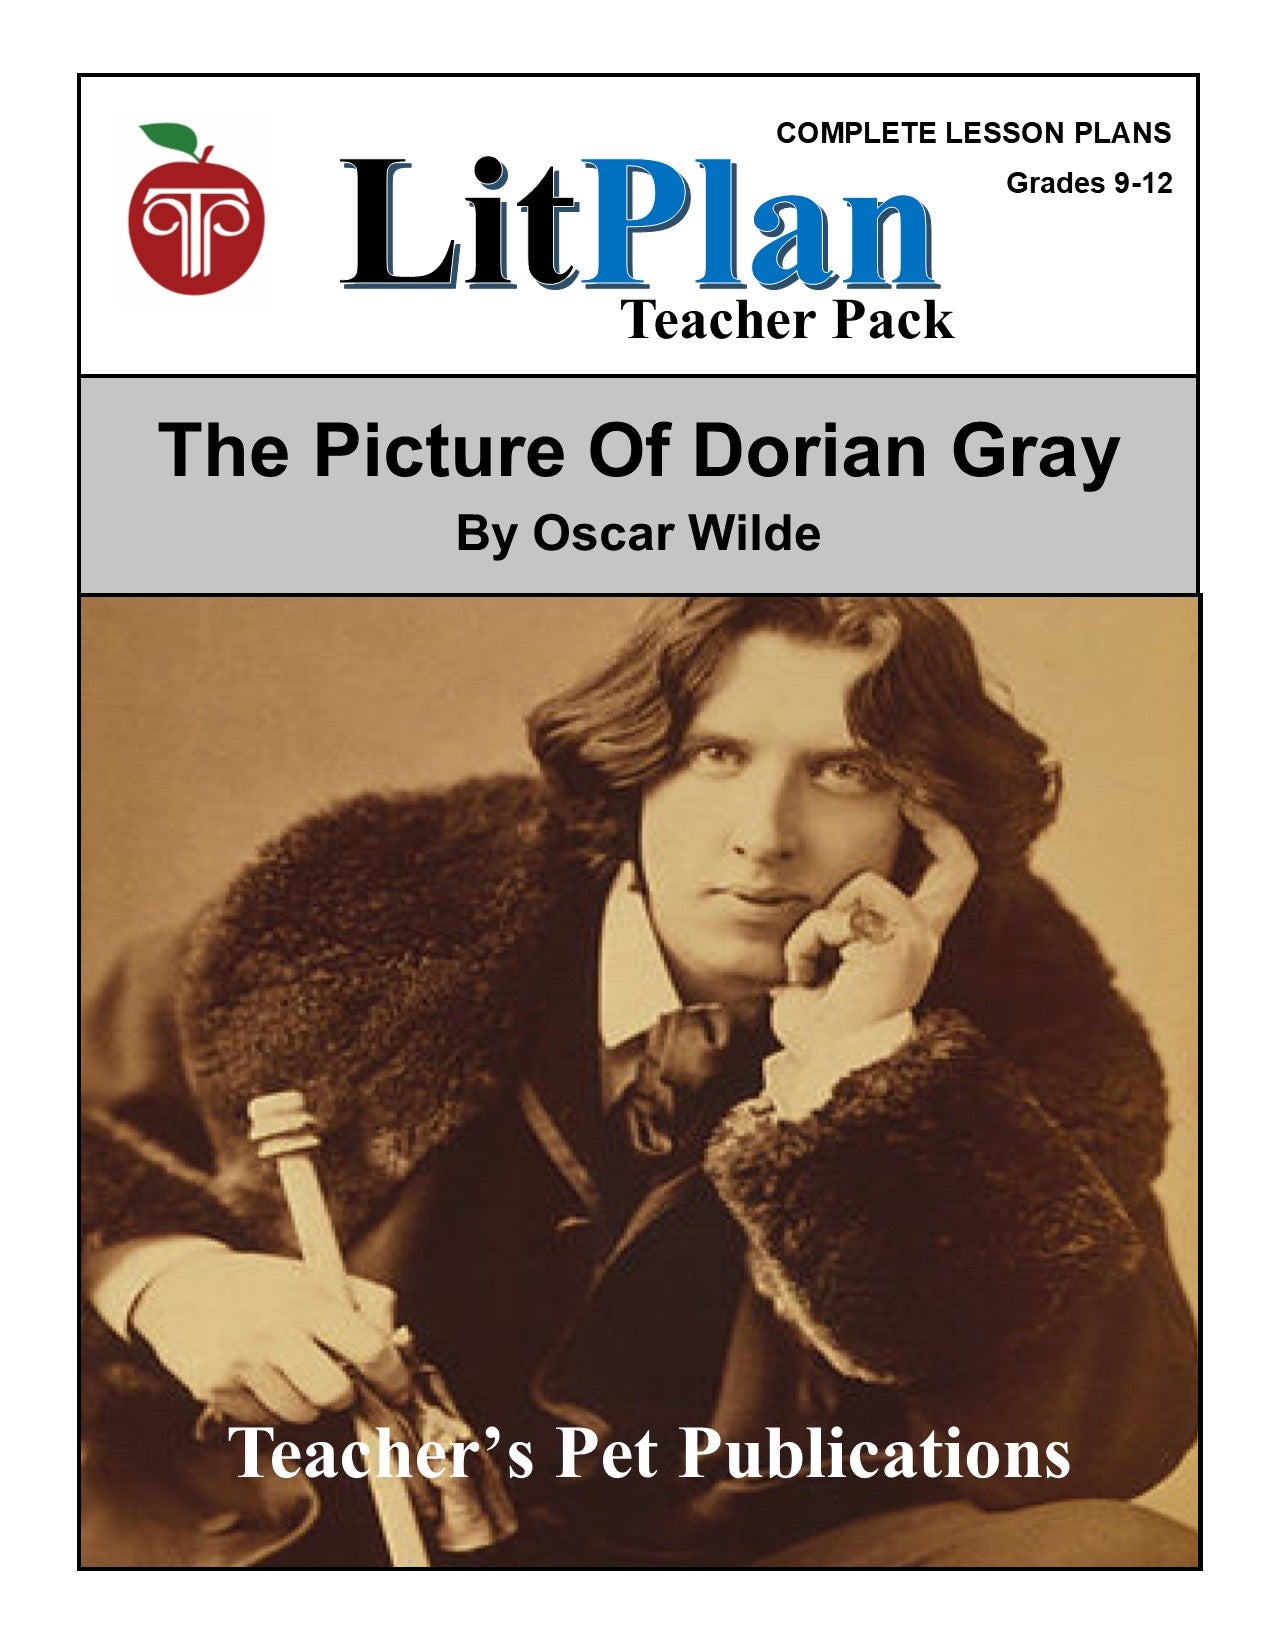 The Picture of Dorian Gray: LitPlan Teacher Pack Grades 9-12